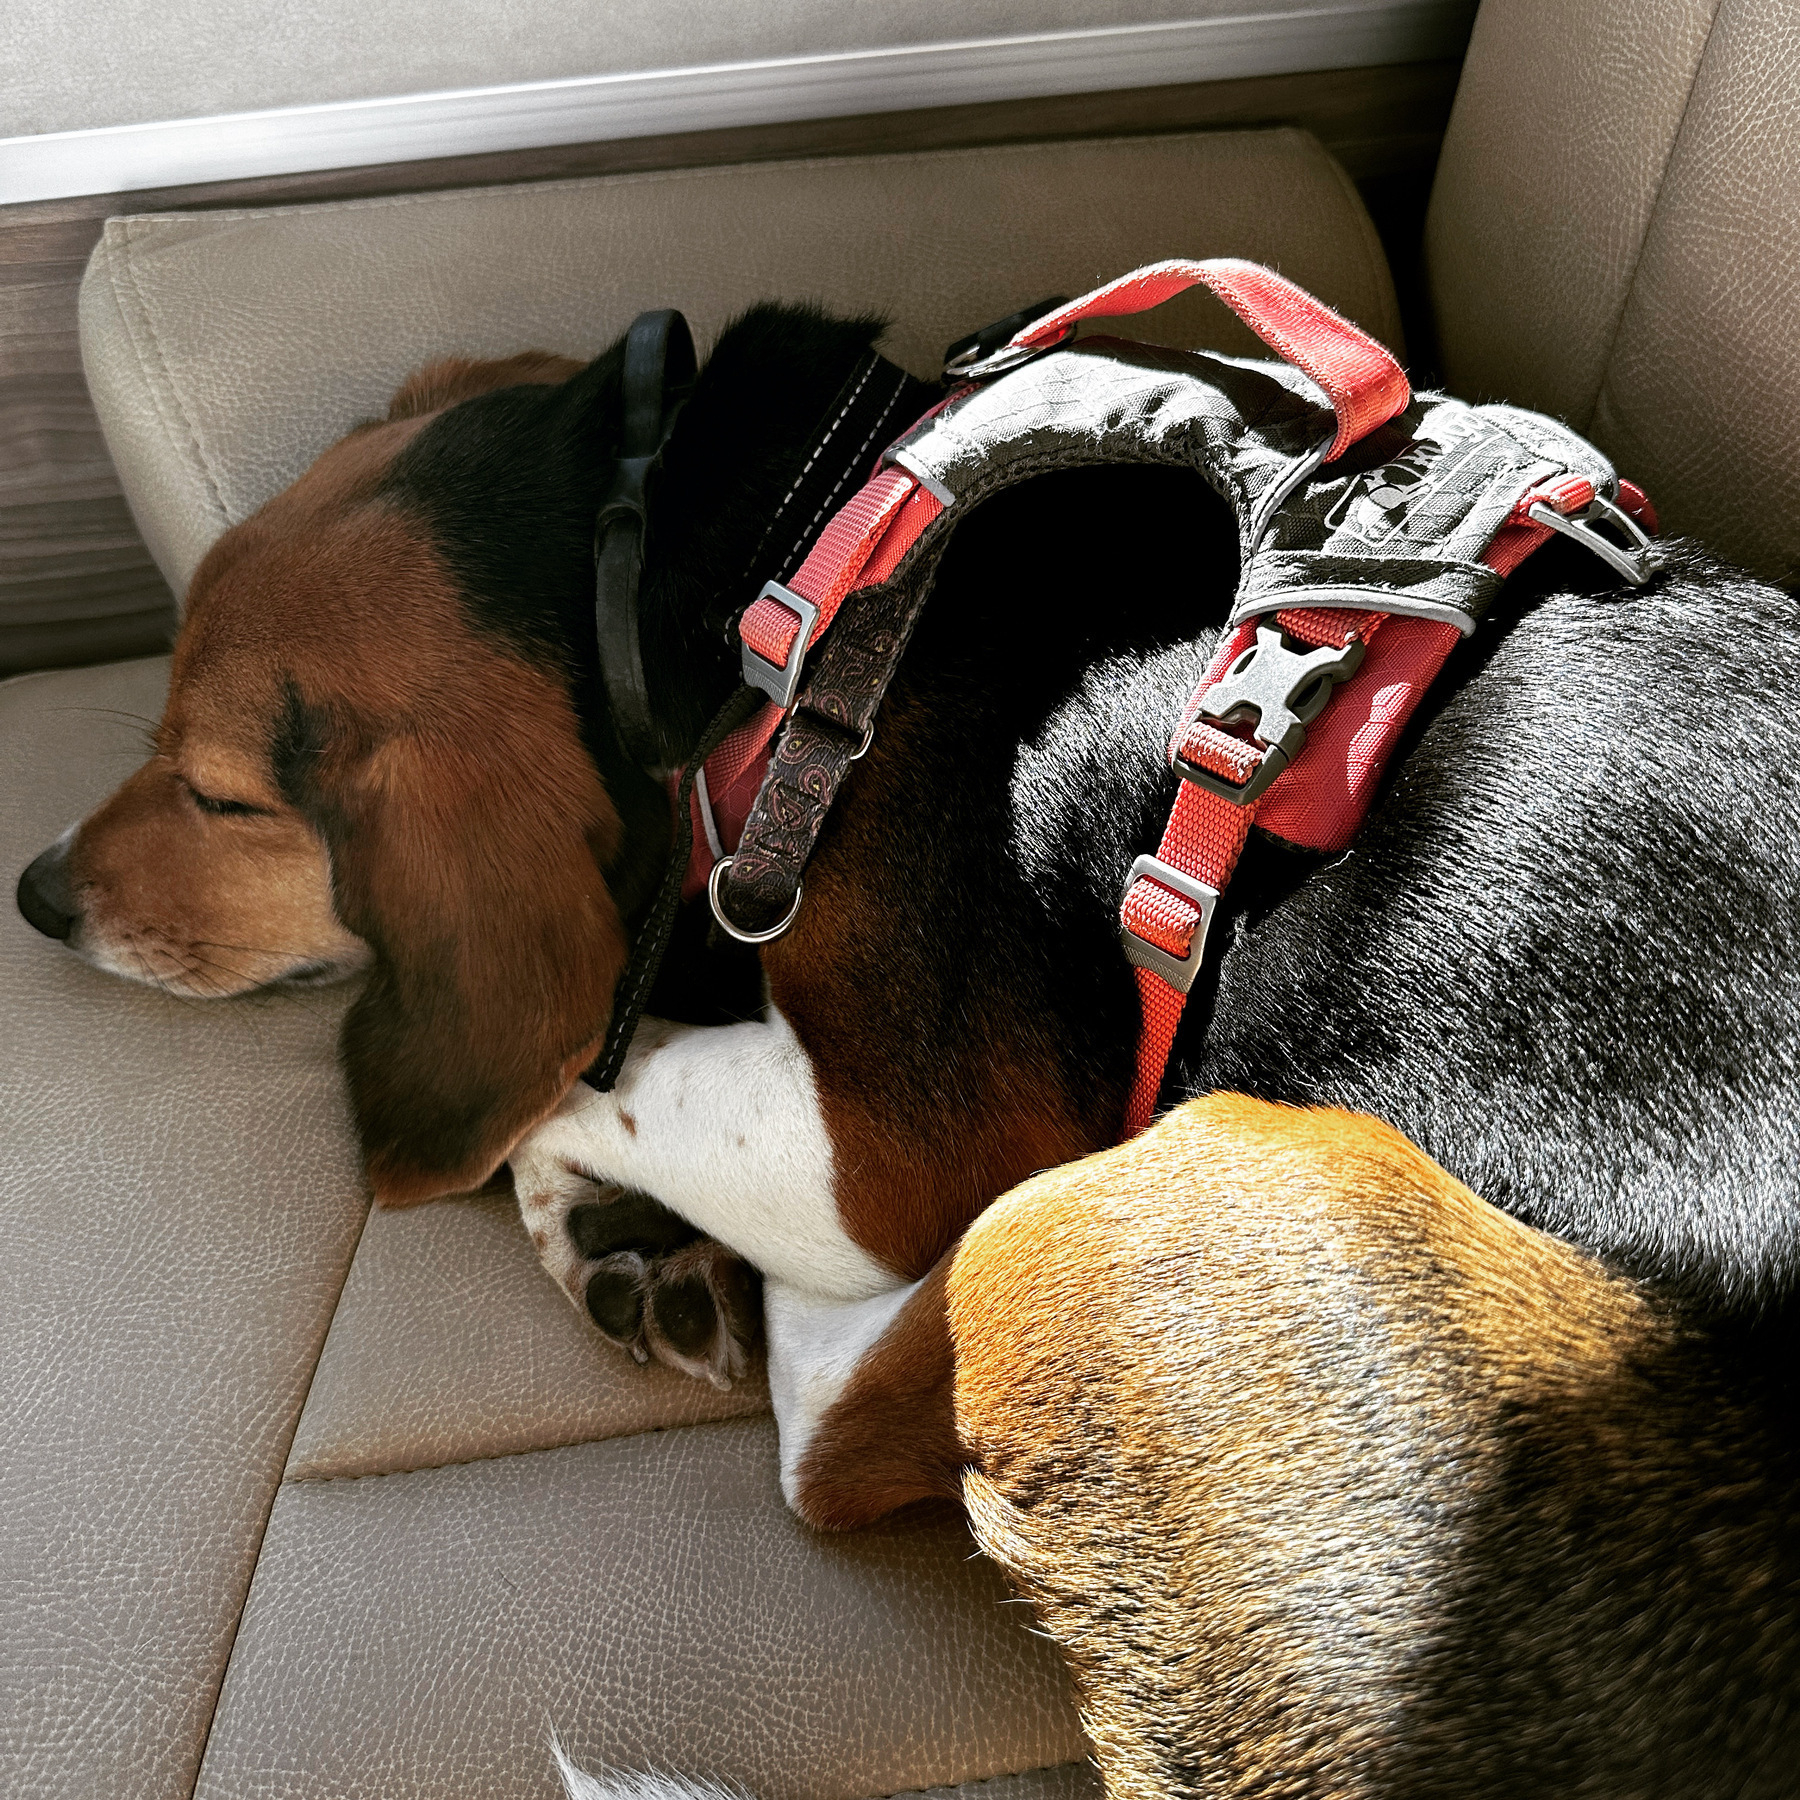 A sleeping beagle 